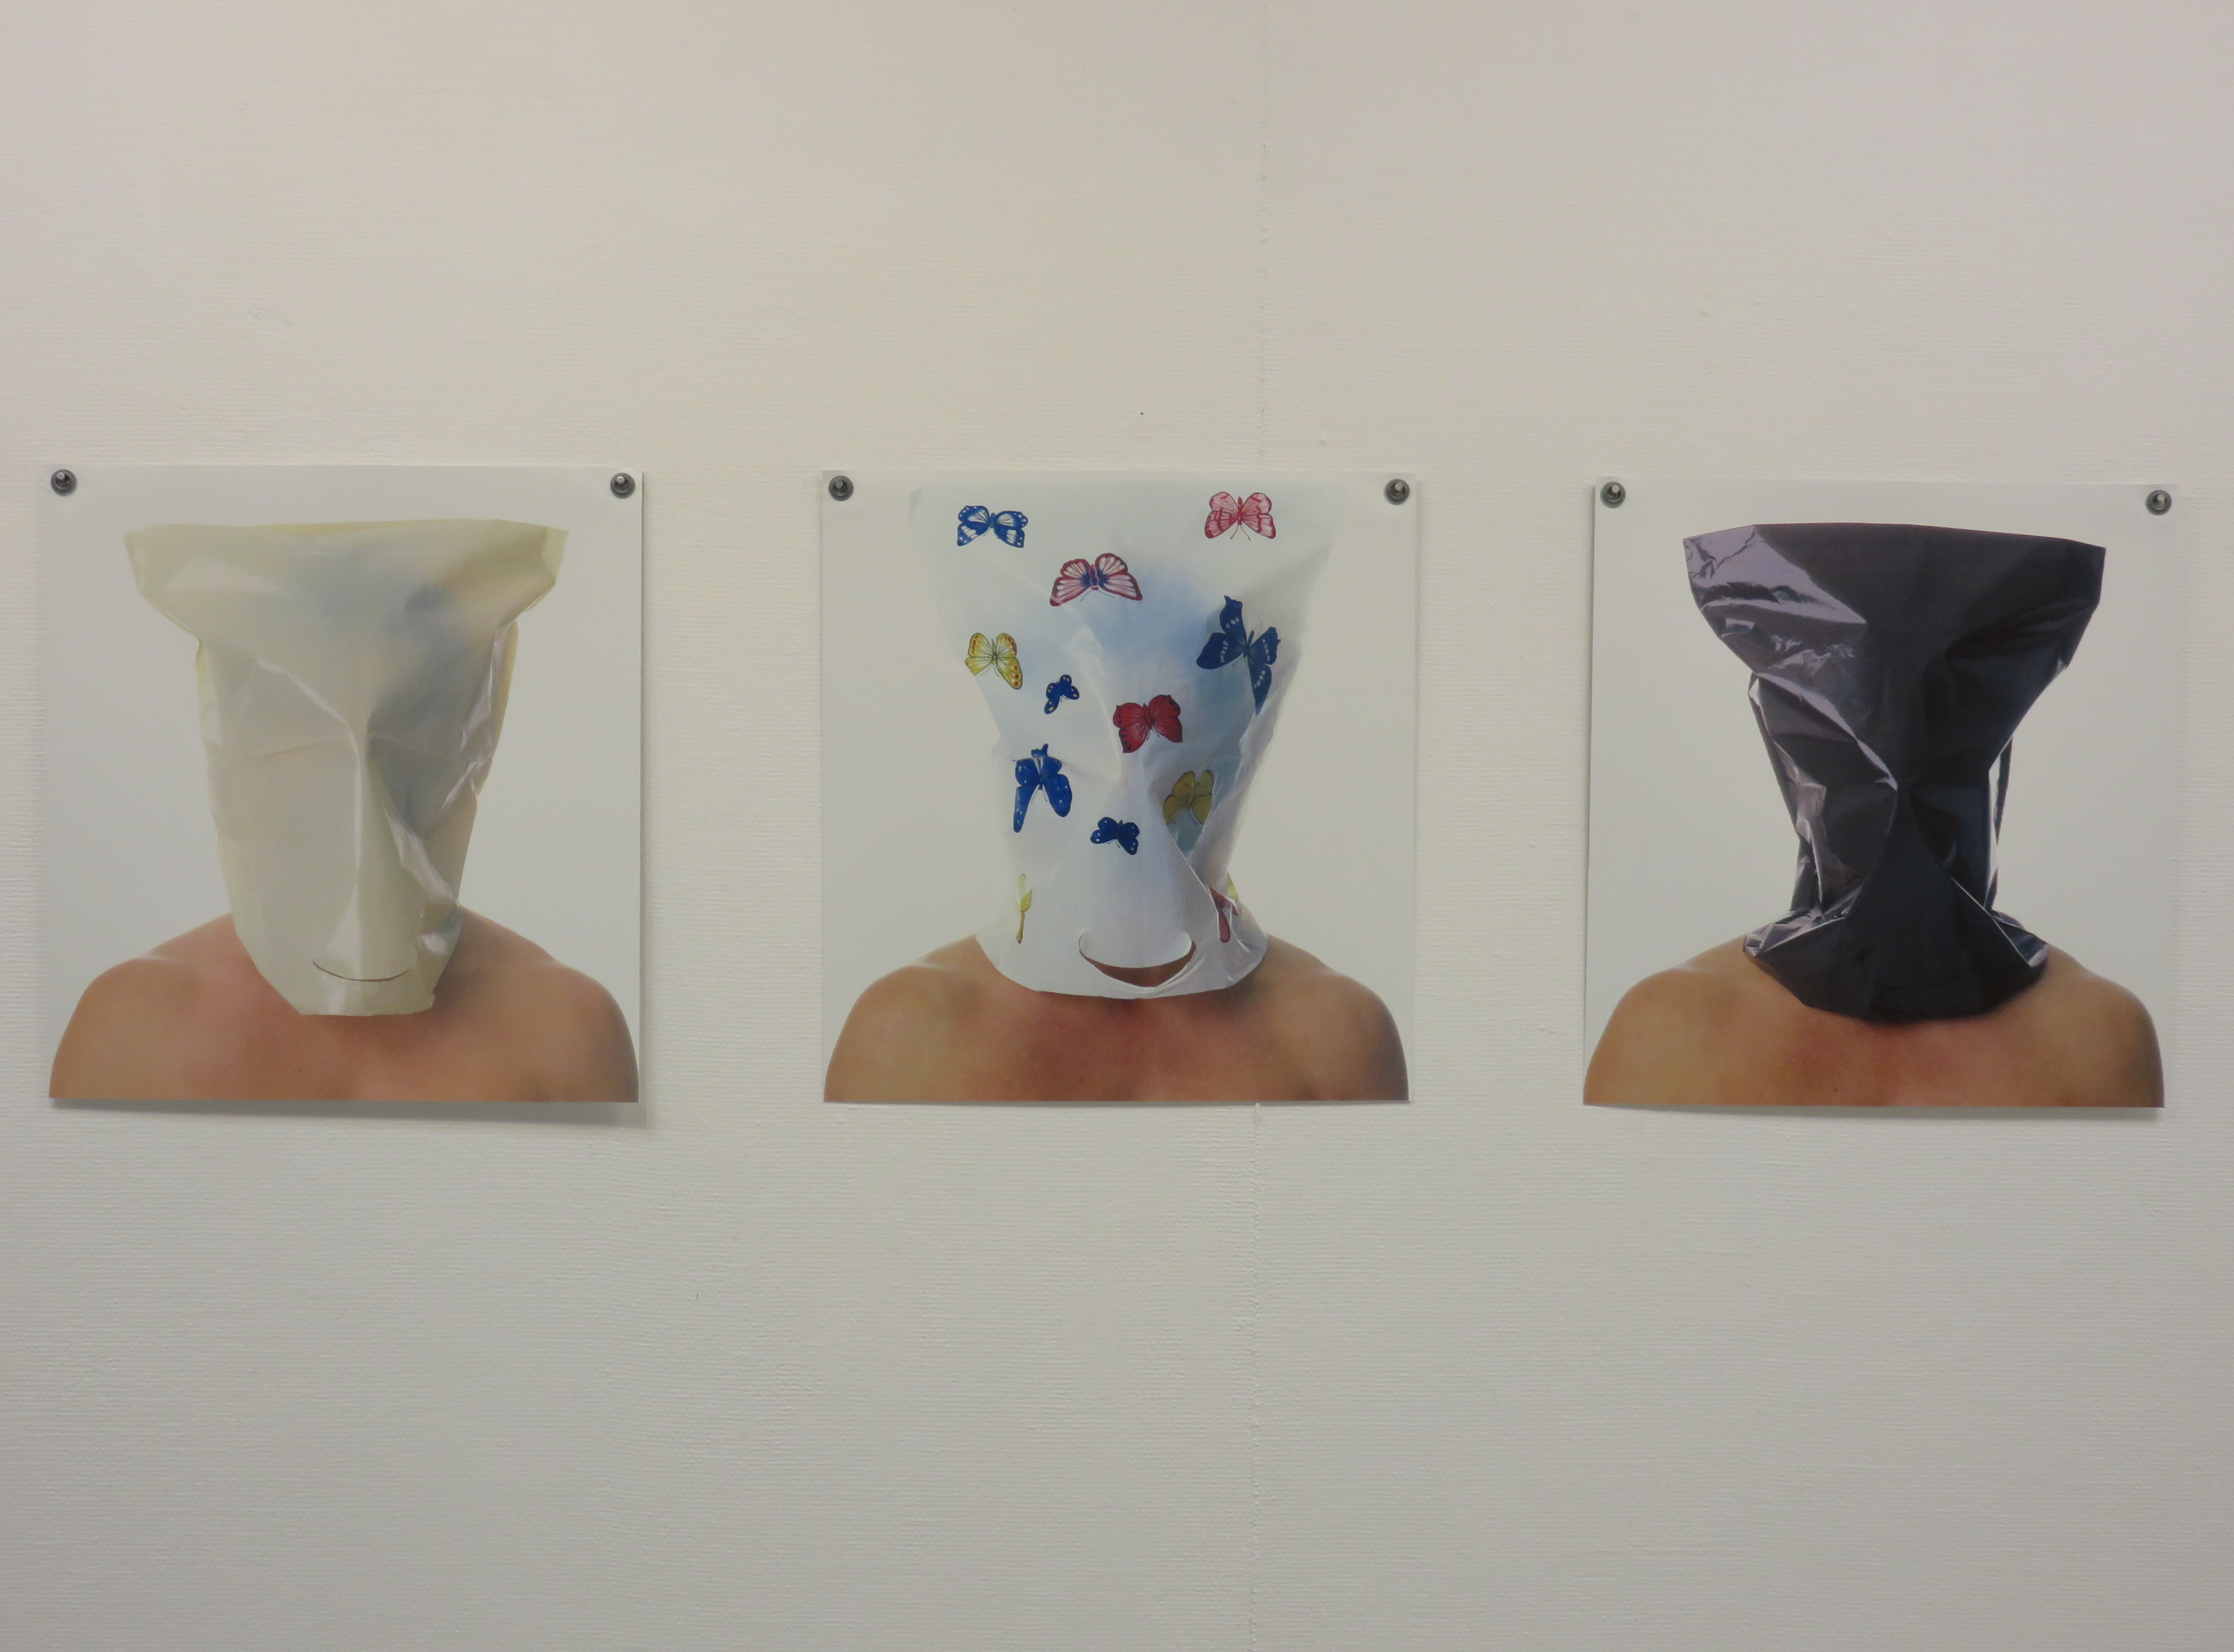 Auf Augenhöhe: Thomas Klegin, 'Passim I Masks' (2003) links